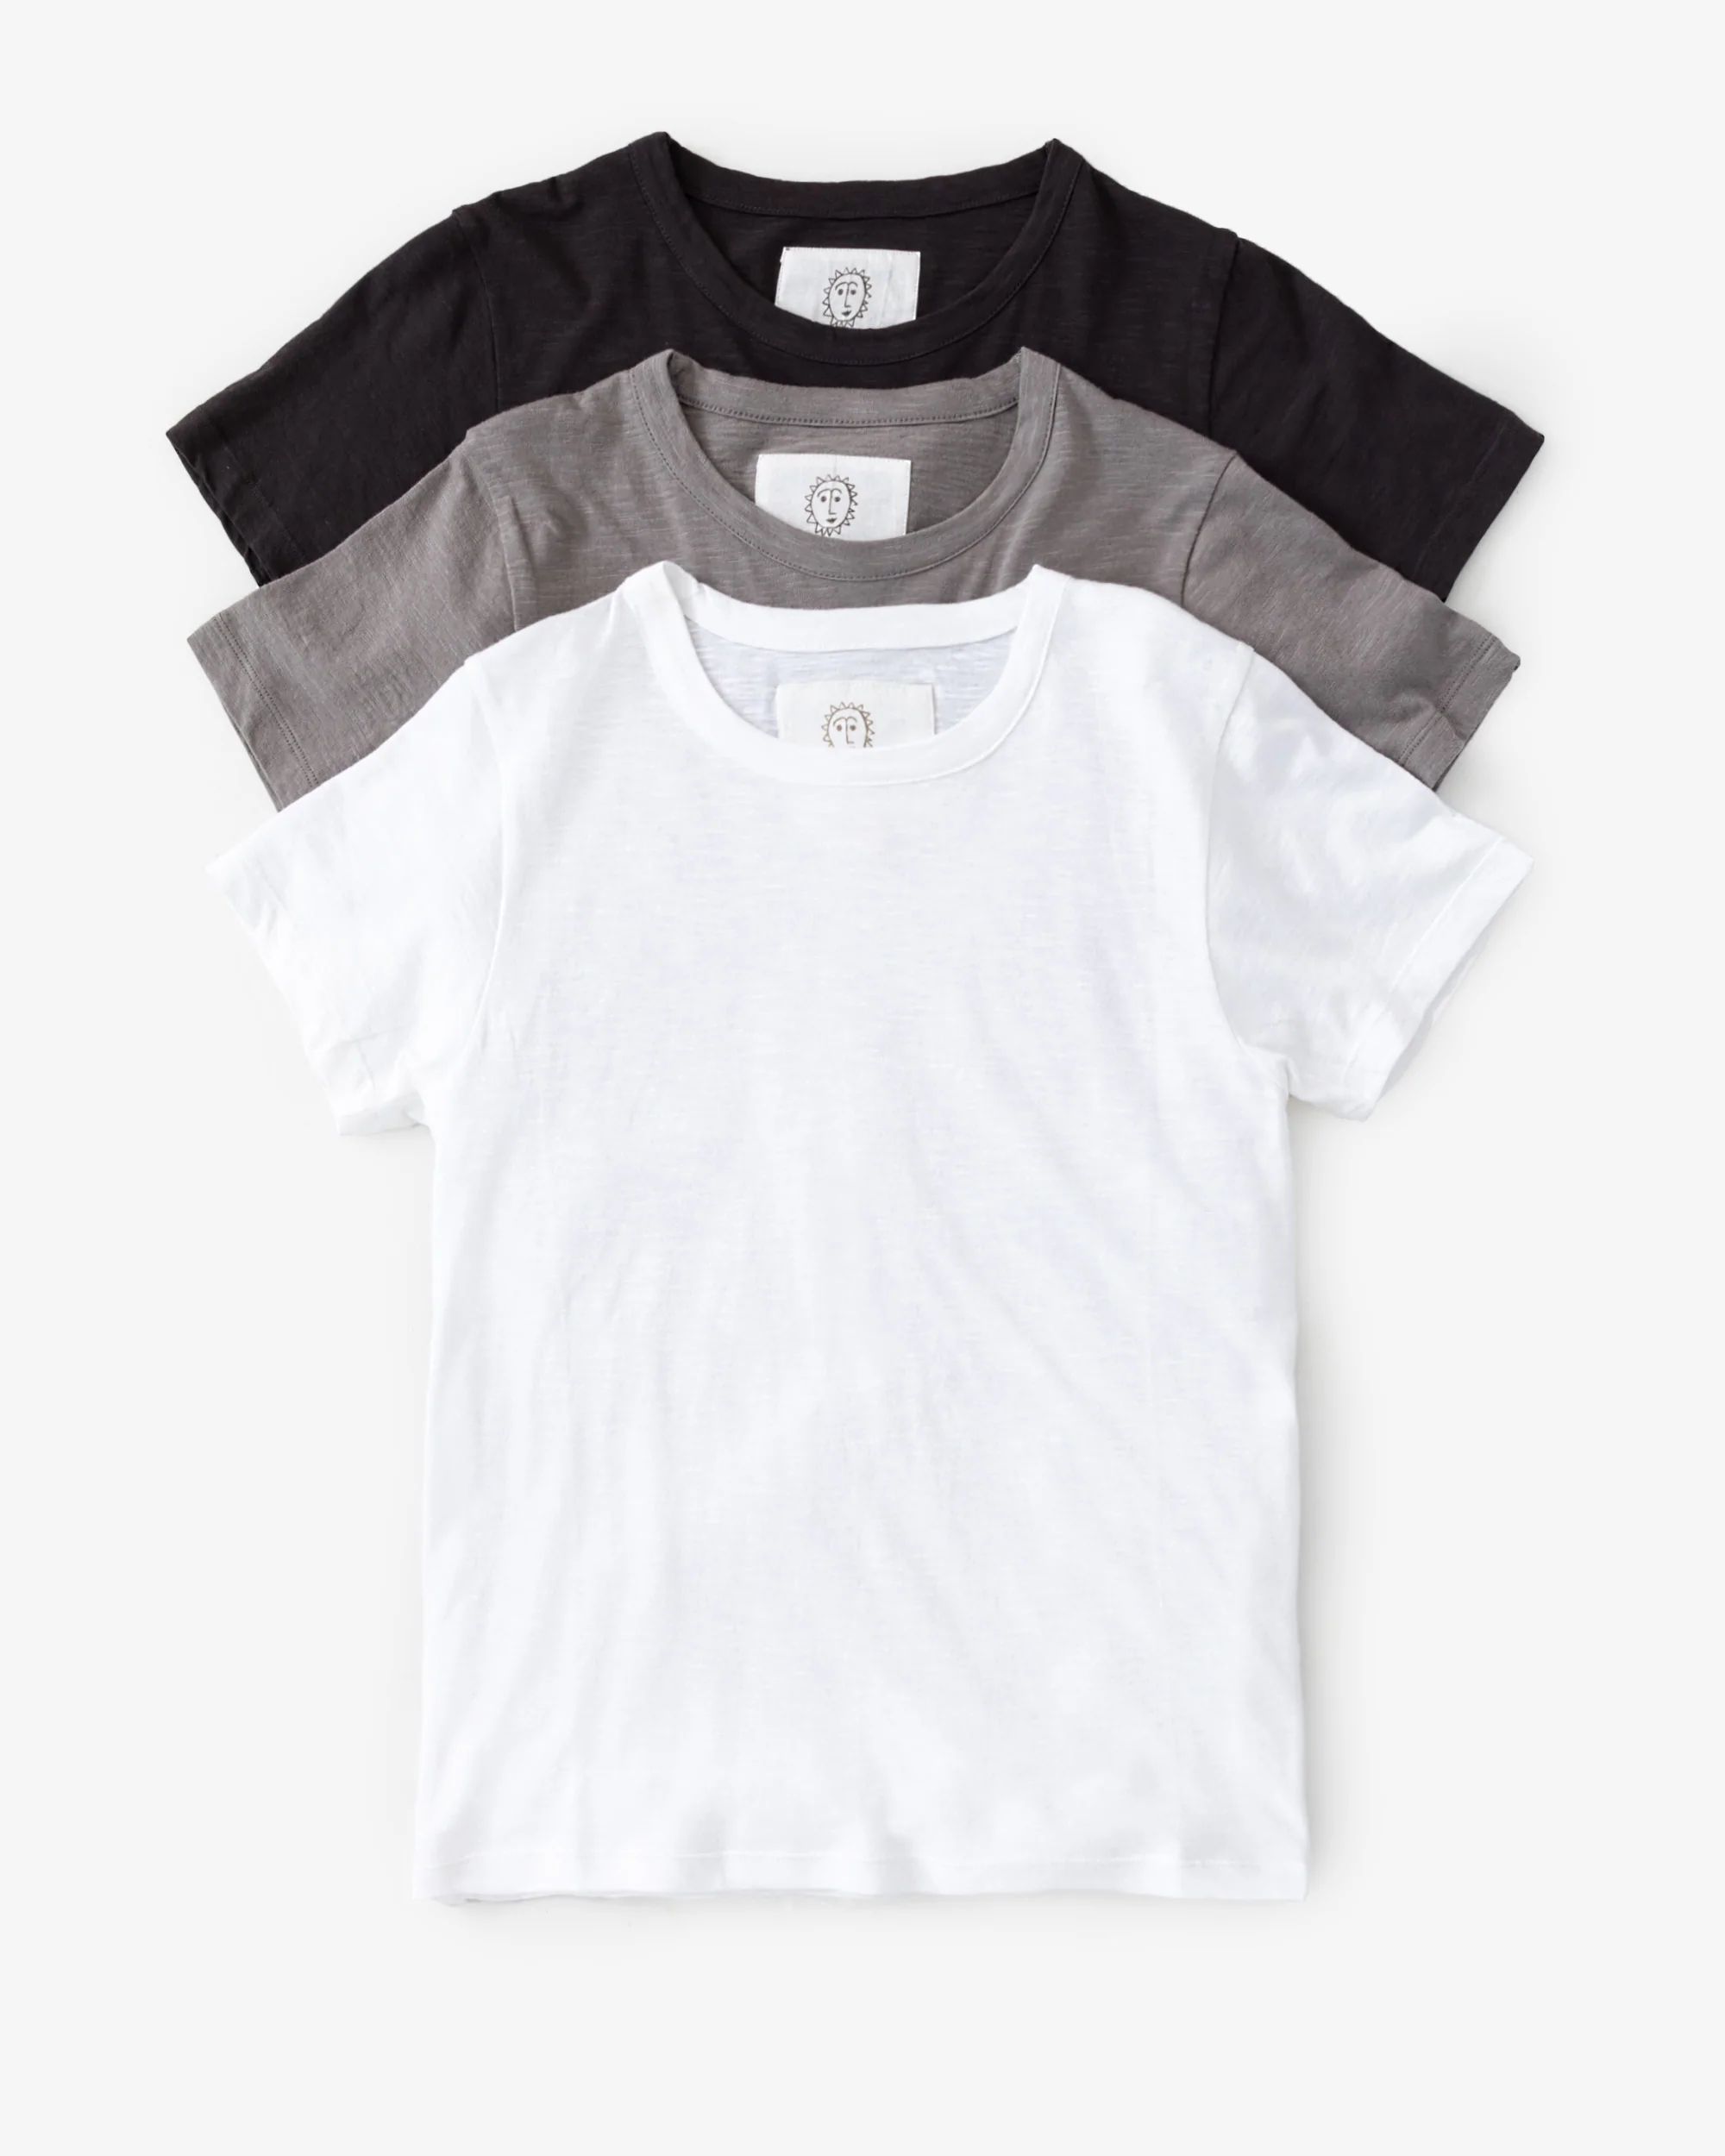 Saturday Tee - Knit T-Shirt 3-Pack - Black/Cloud/Pebble | Printfresh